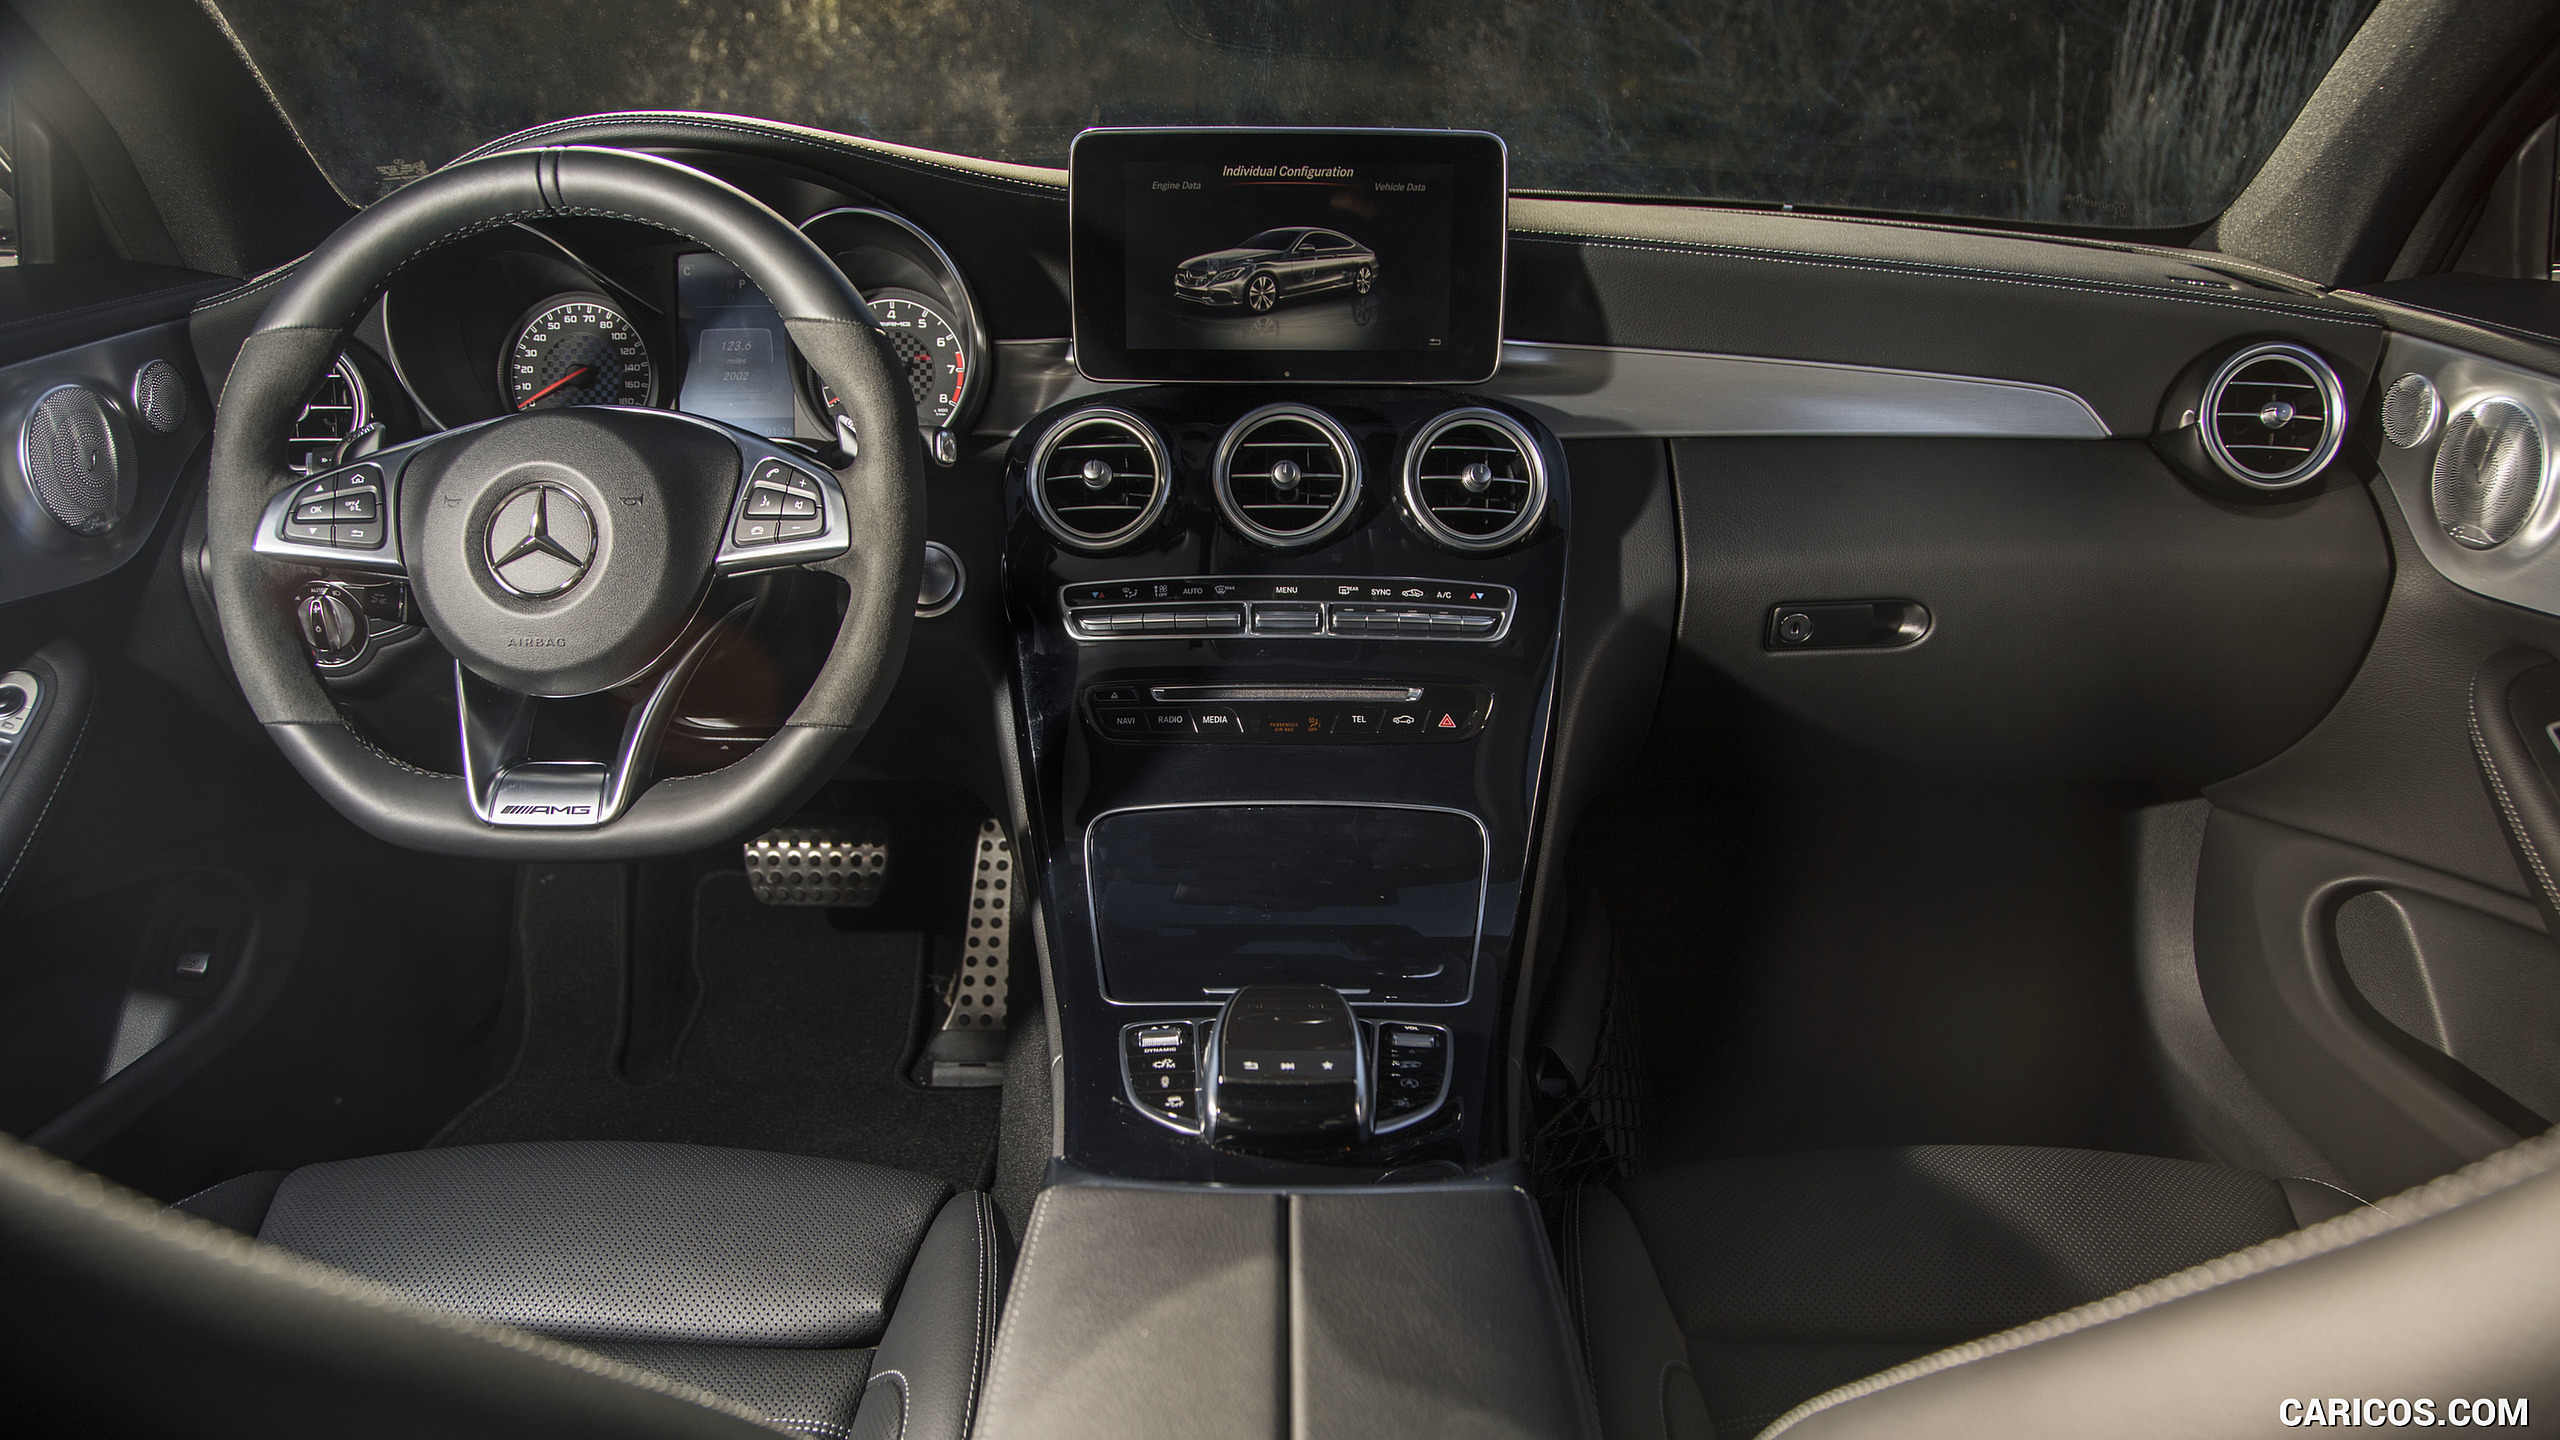 2017 Mercedes-AMG C43 Coupe (US-Spec) - Interior, Cockpit, #32 of 38